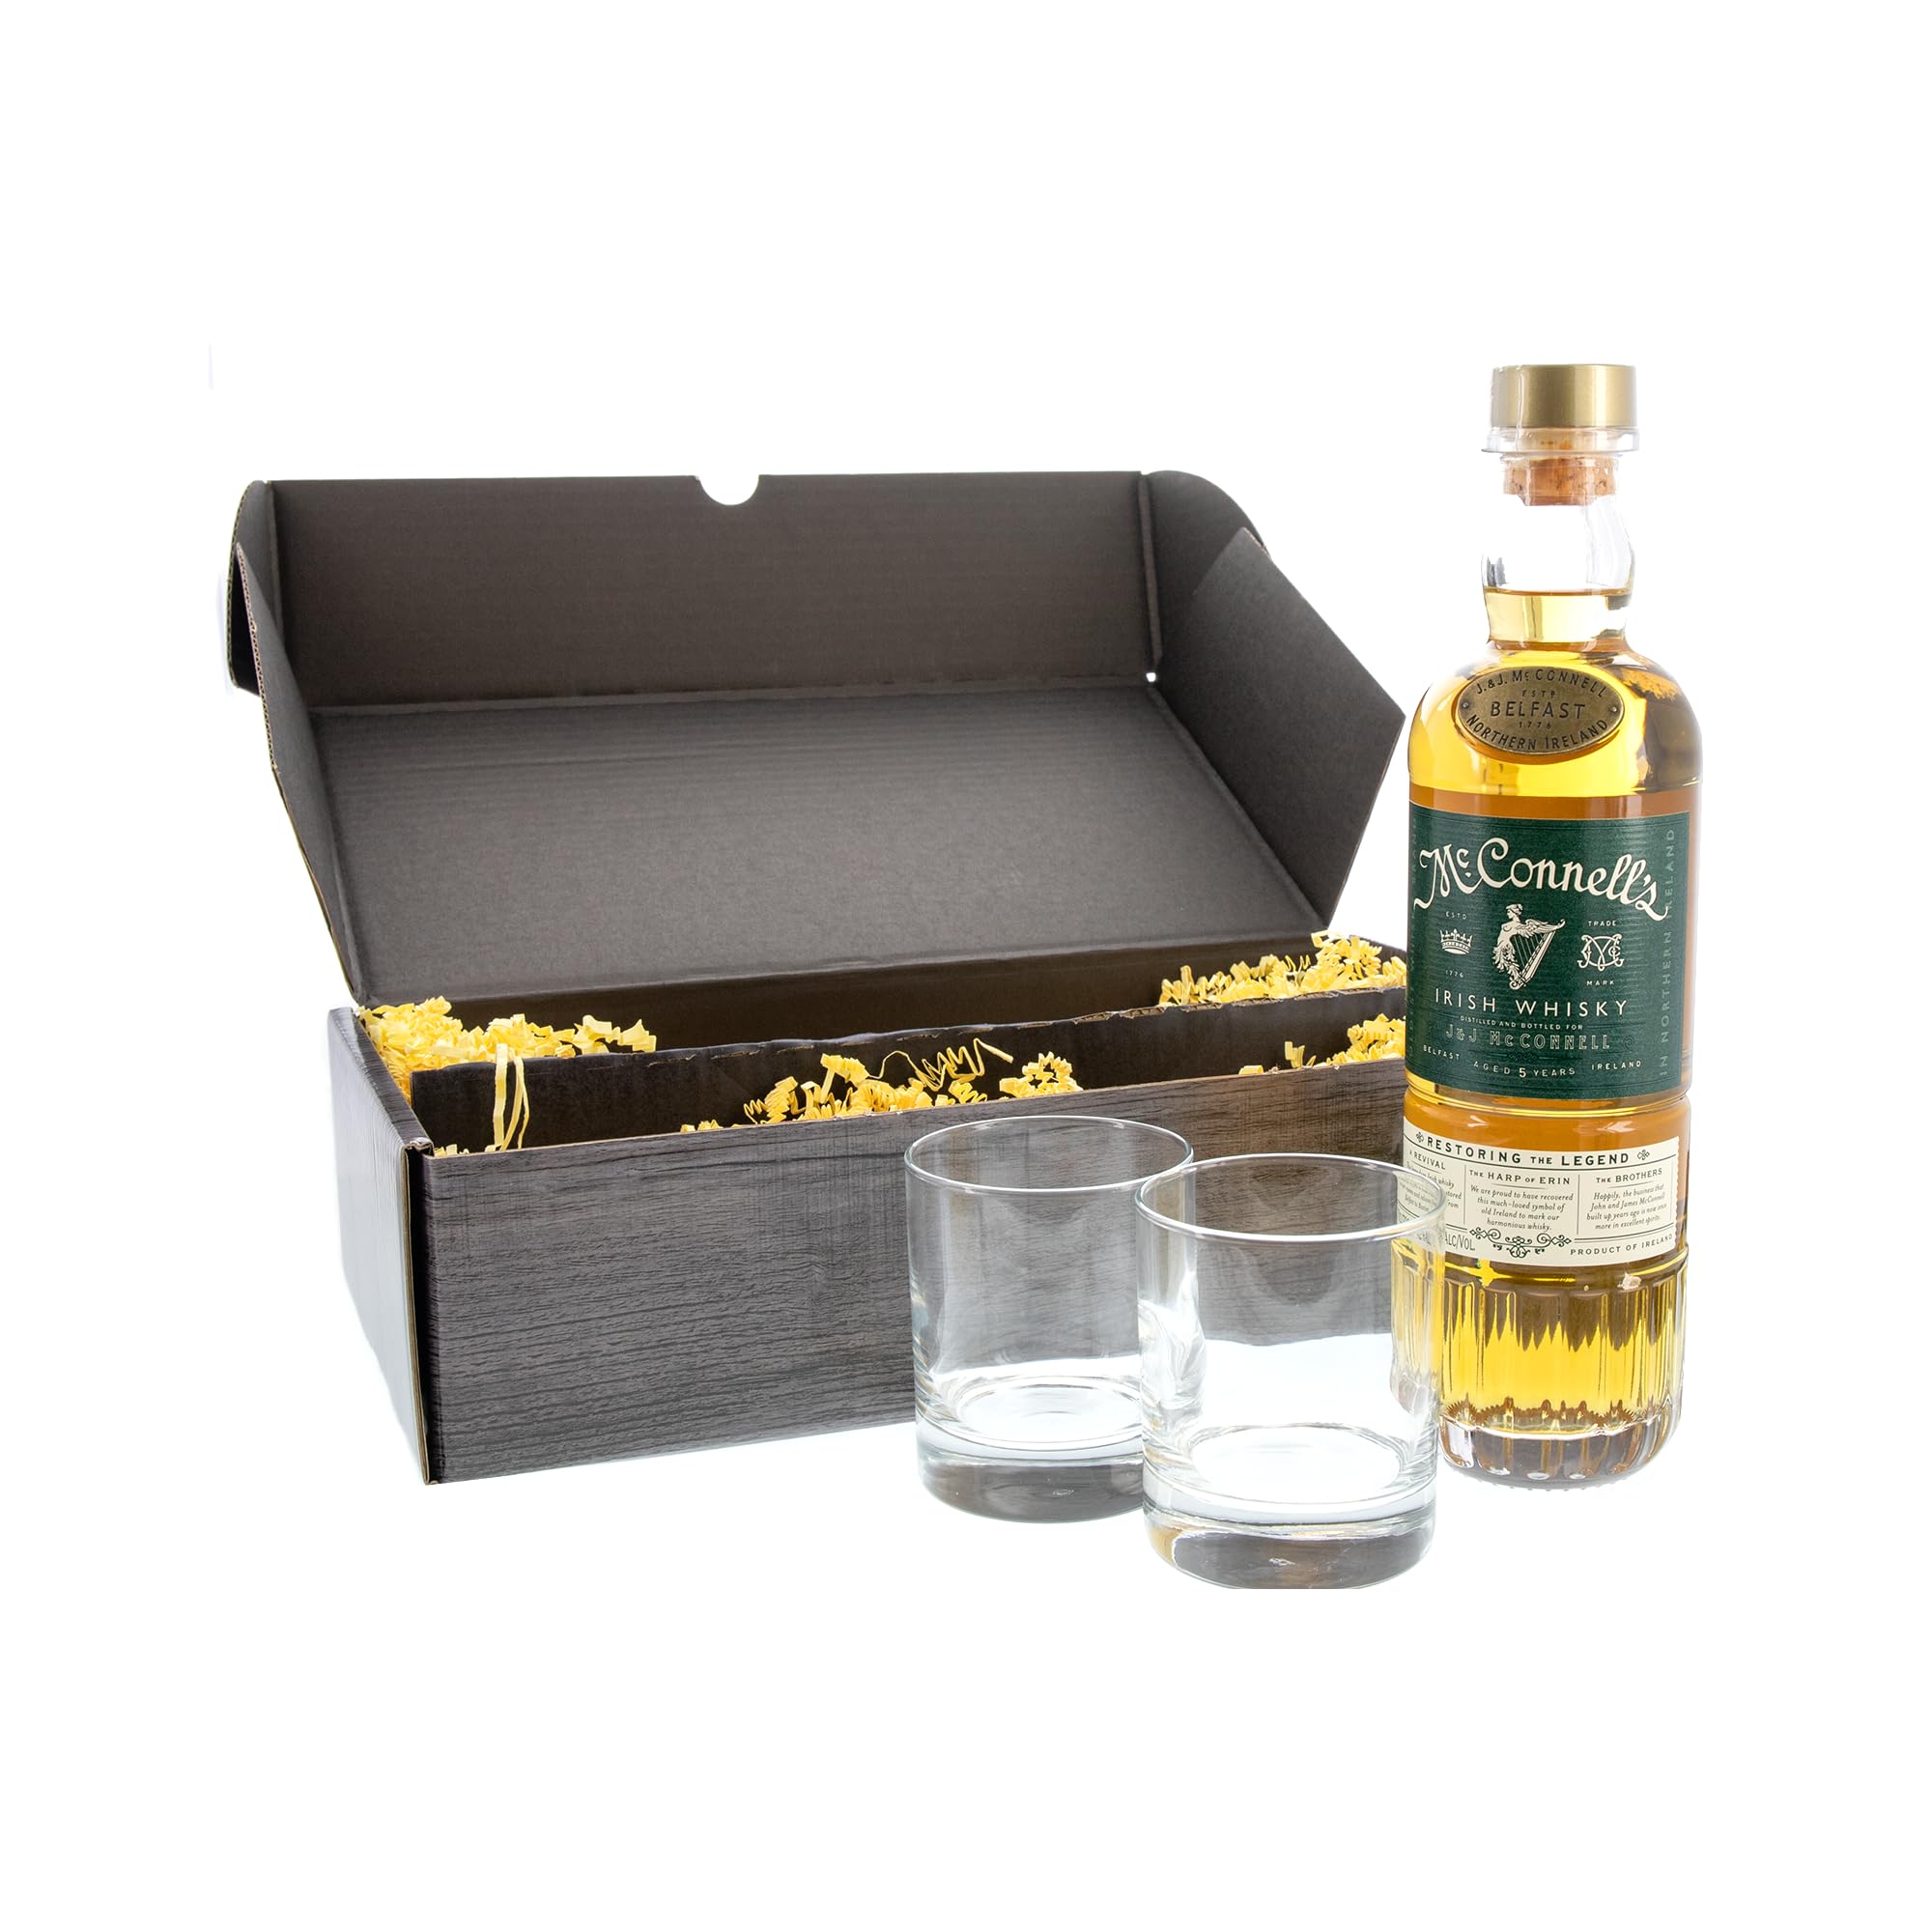 Bull & Bear exklusiv Geschenk Box McConnells McConnell's 5 Year Irish Whiskey mit 2 passenden Gläsern, aged in first fill American oak casks, 42% 70cl Blended Whisky (1 x 0.7 l)